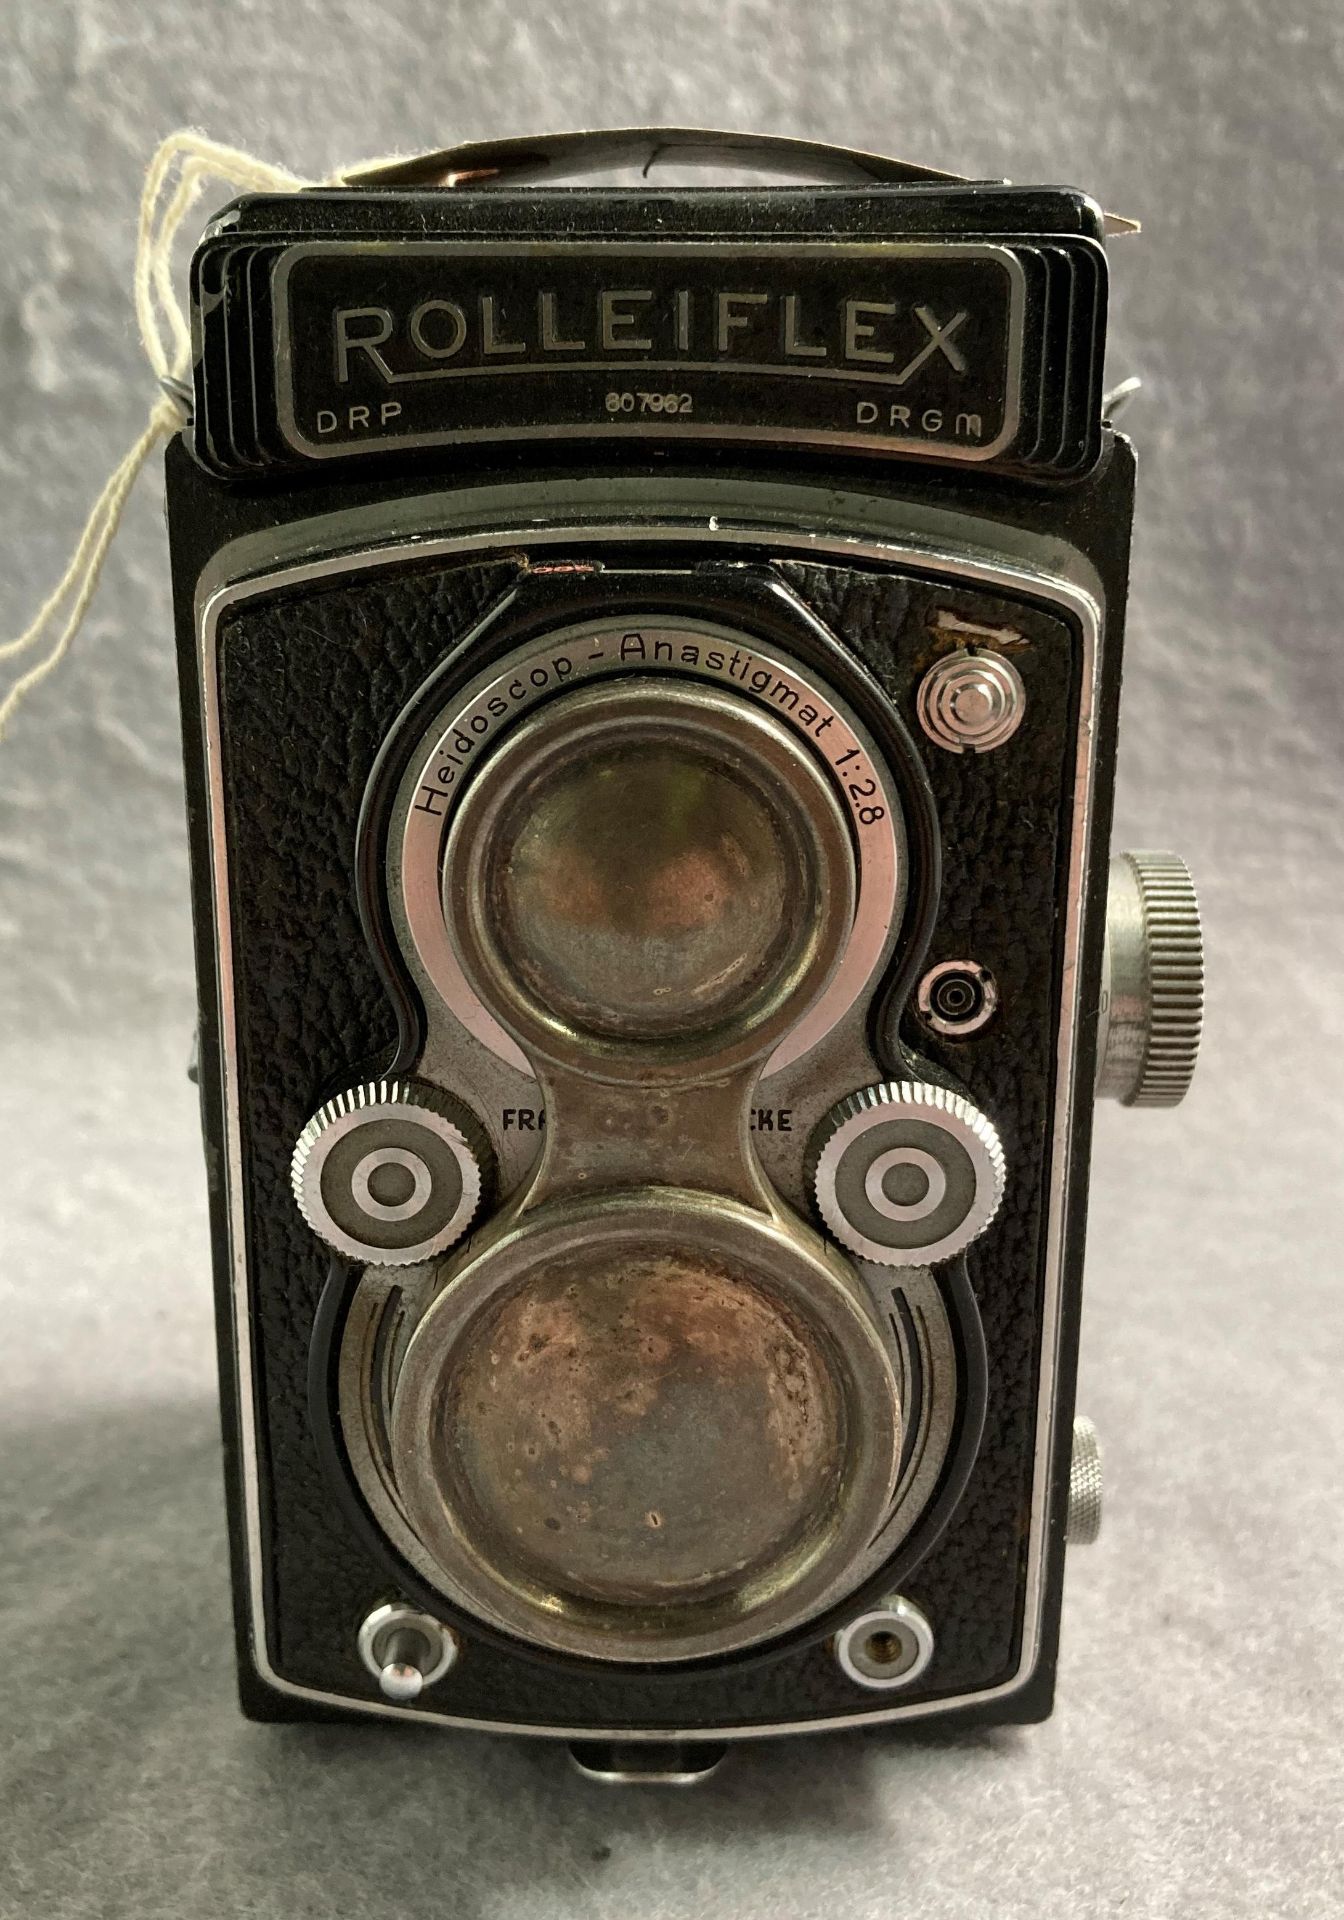 A Franke and Heidecke Rolleiflex DRP DRGM 607962 camera with Tessar 1:3.5F=7.